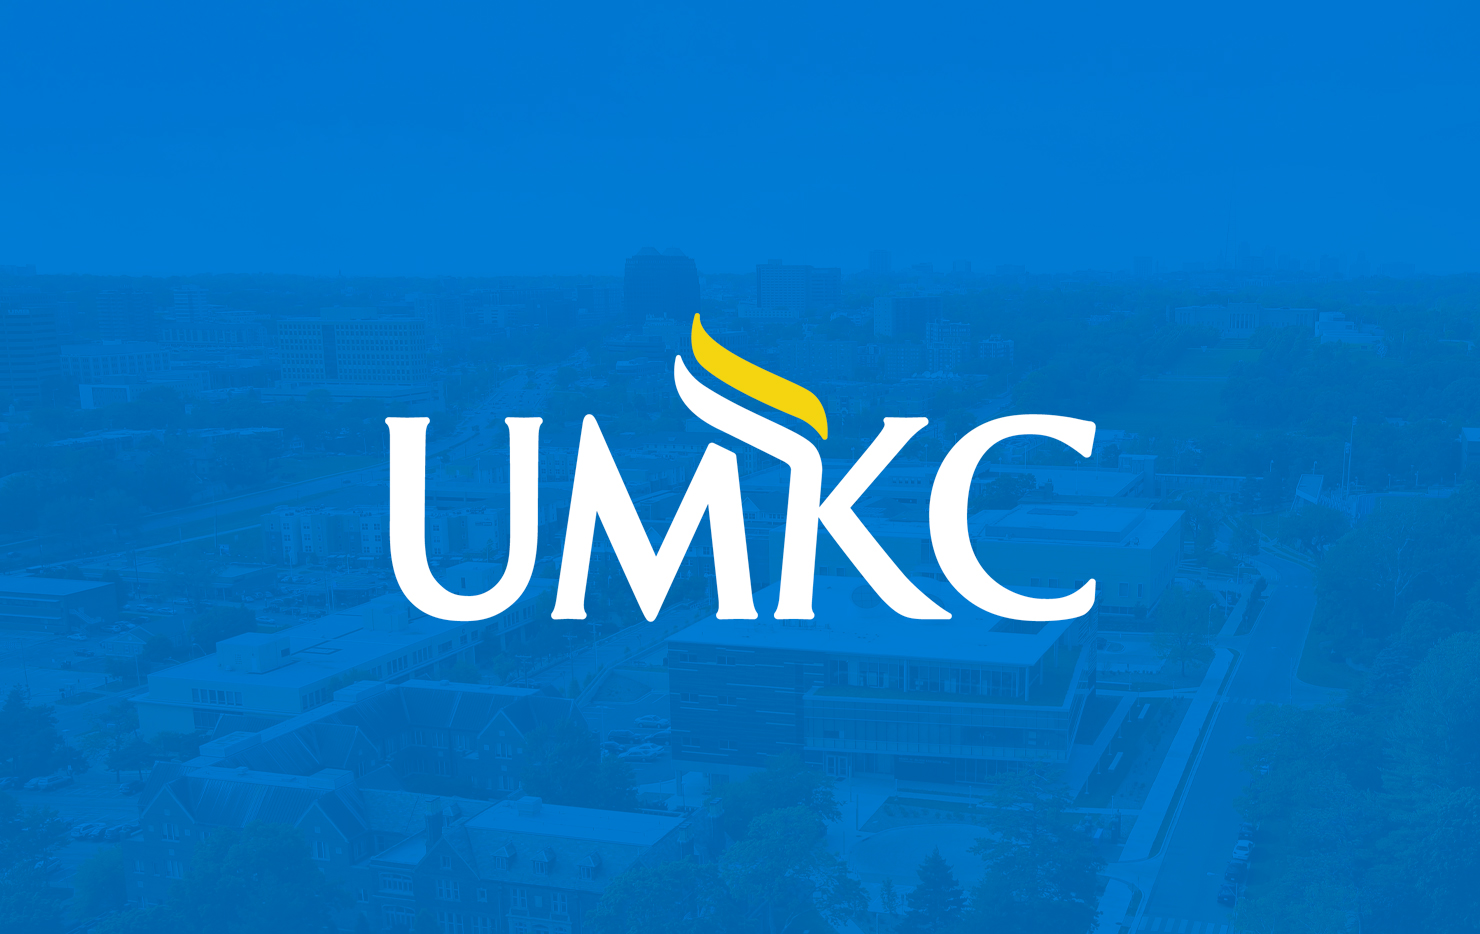 www.umkc.edu